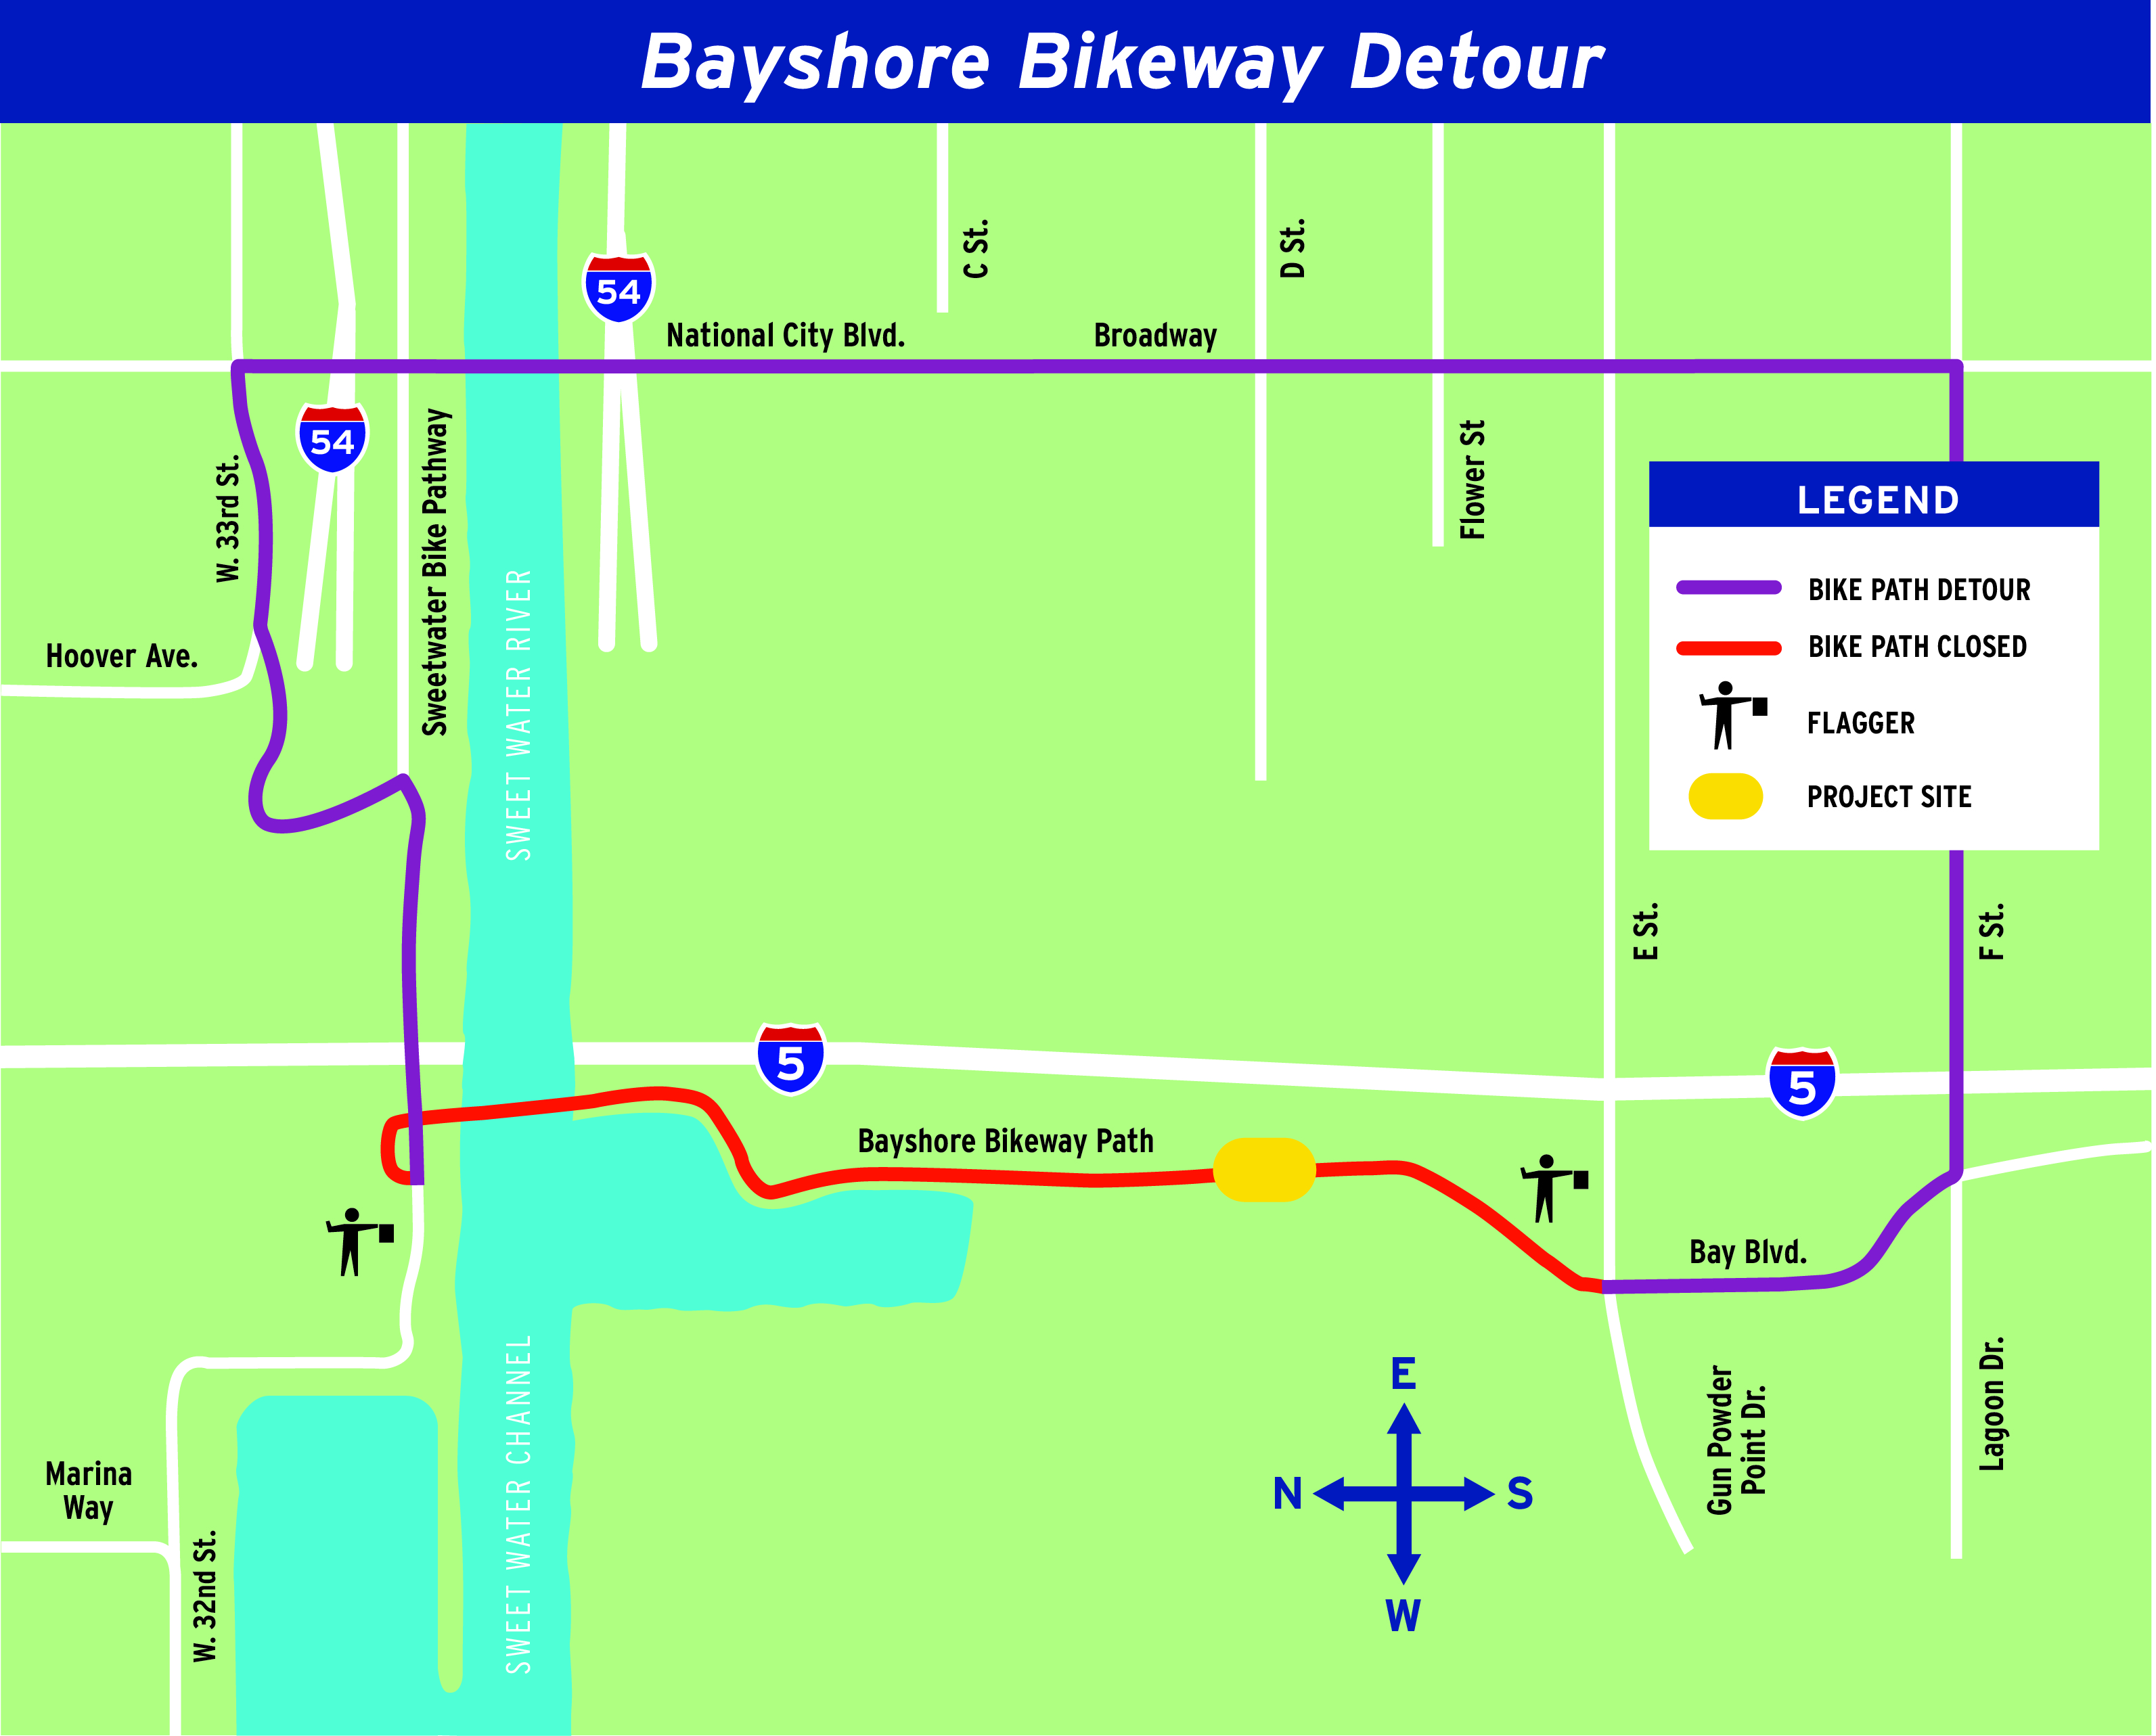 Bayshore Bikeway Detour